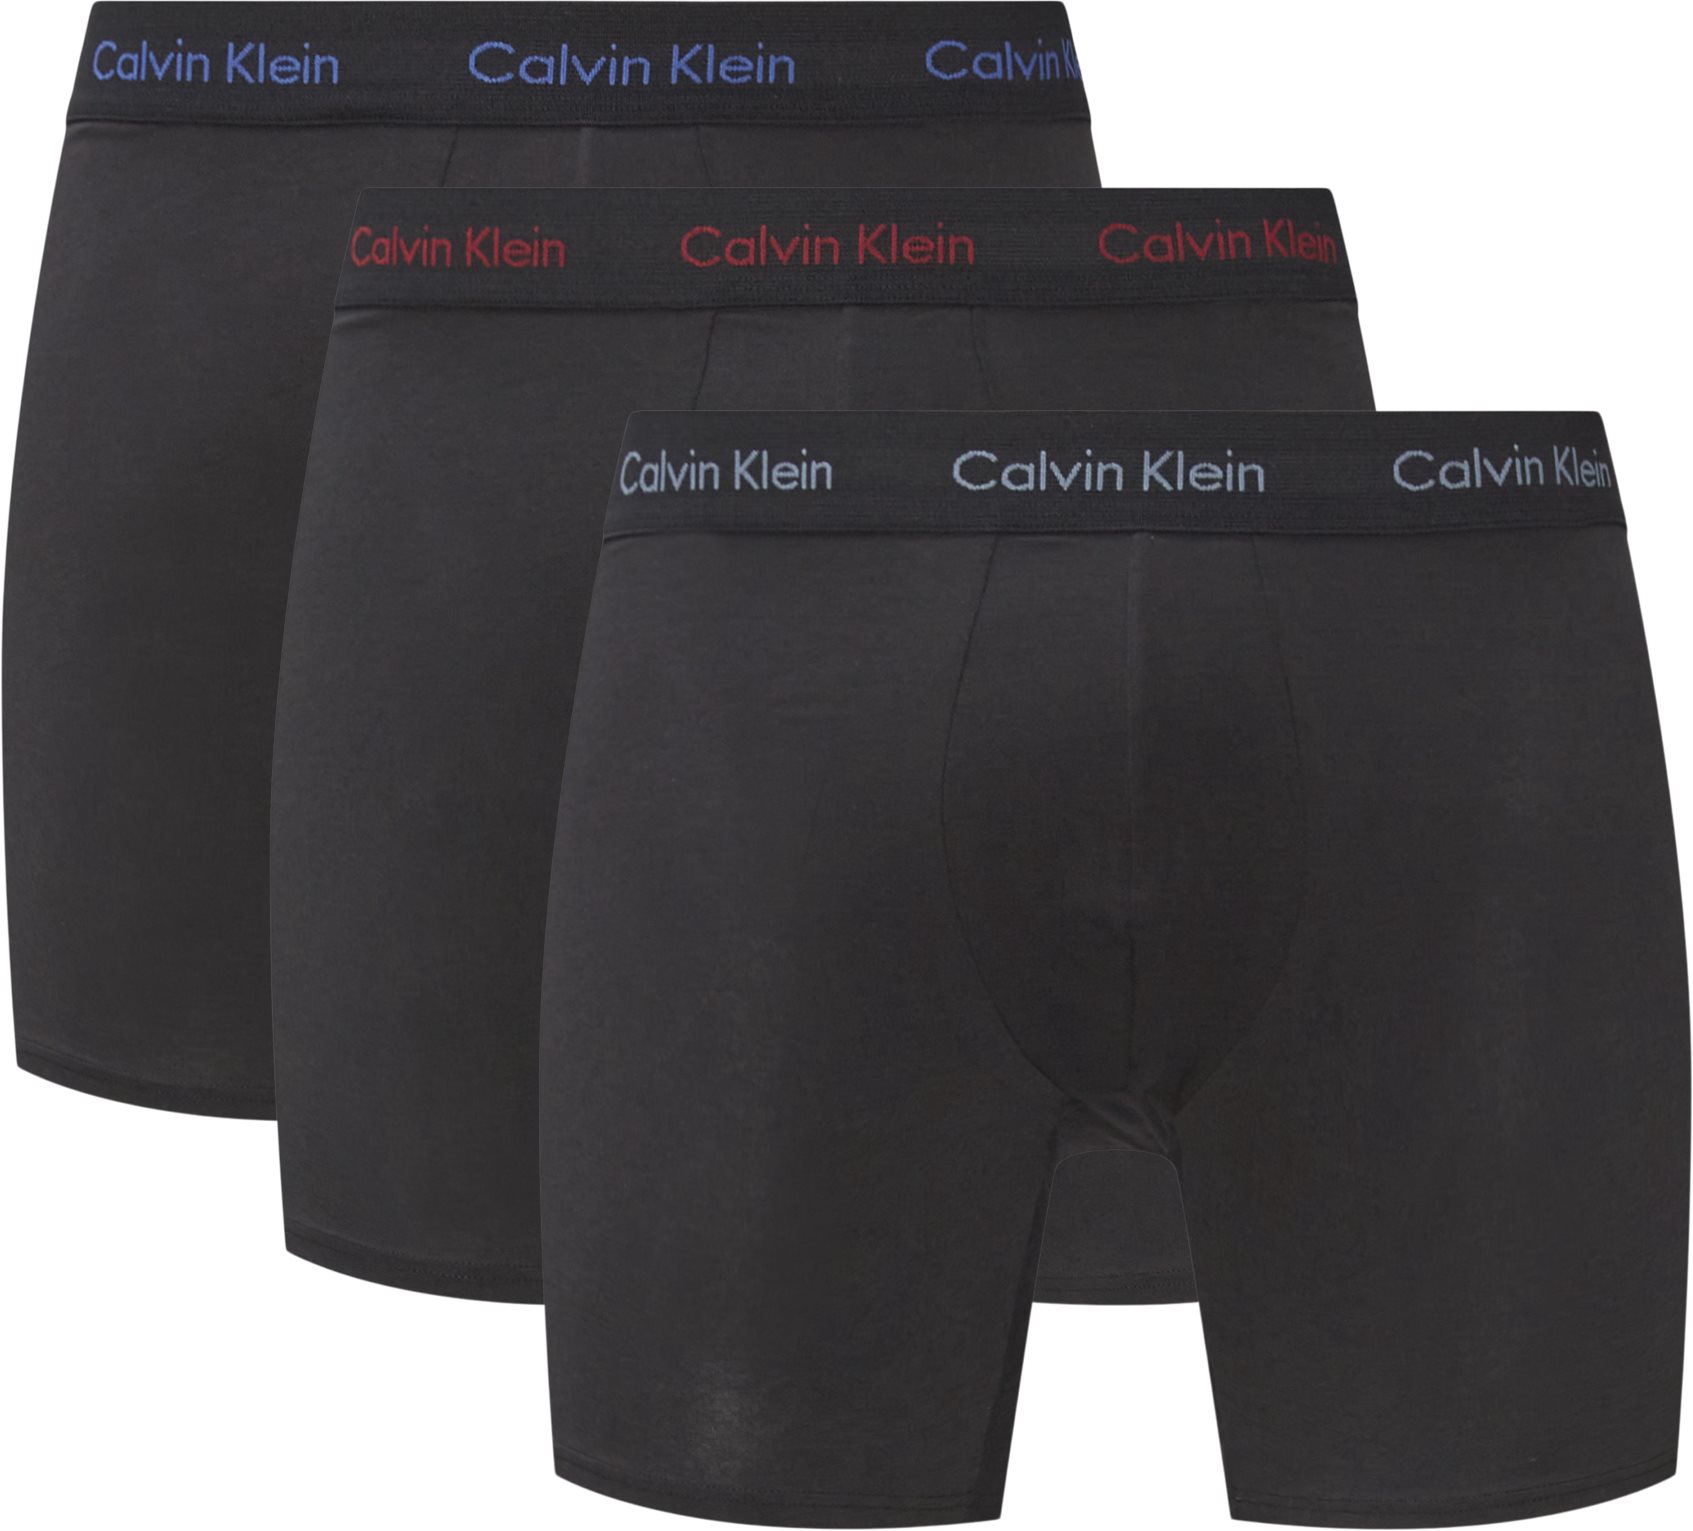 000NB1770AX09 - Underwear - Regular fit - Black